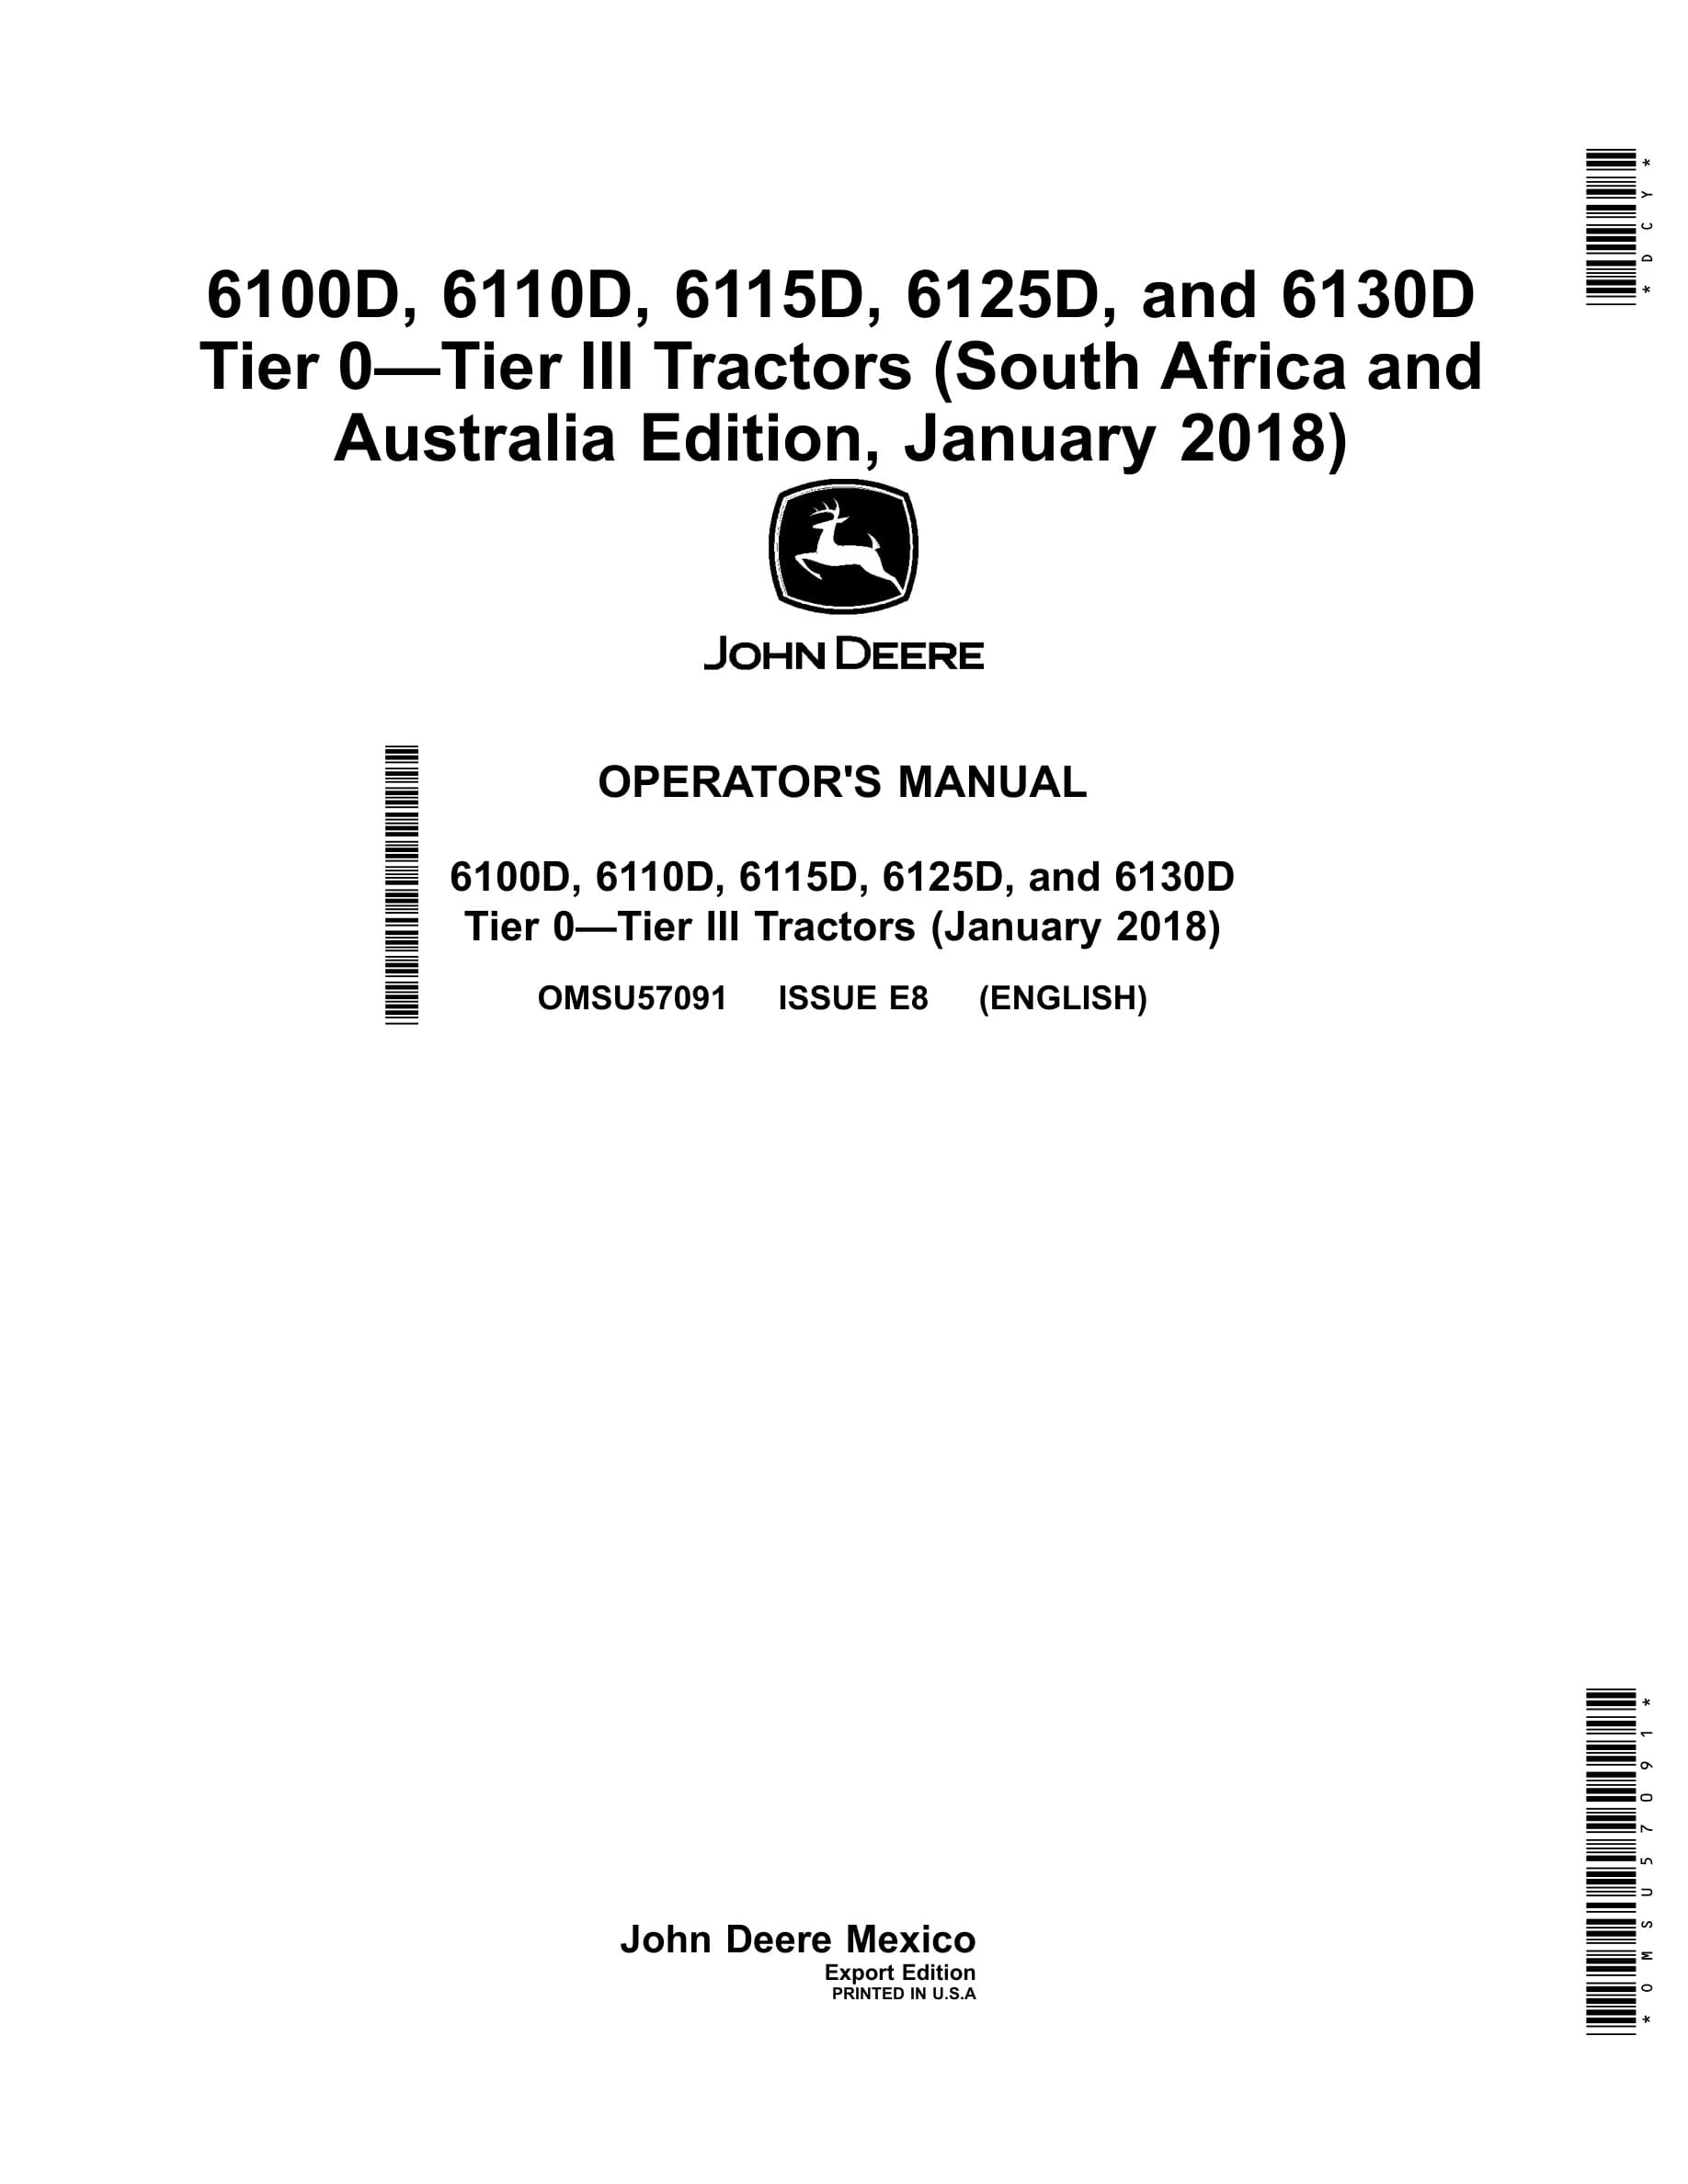 John Deere 6100d, 6110d, 6115d, 6125d, And 6130d Tier 0-tier Iii Tractors Operator Manuals OMSU57091-1